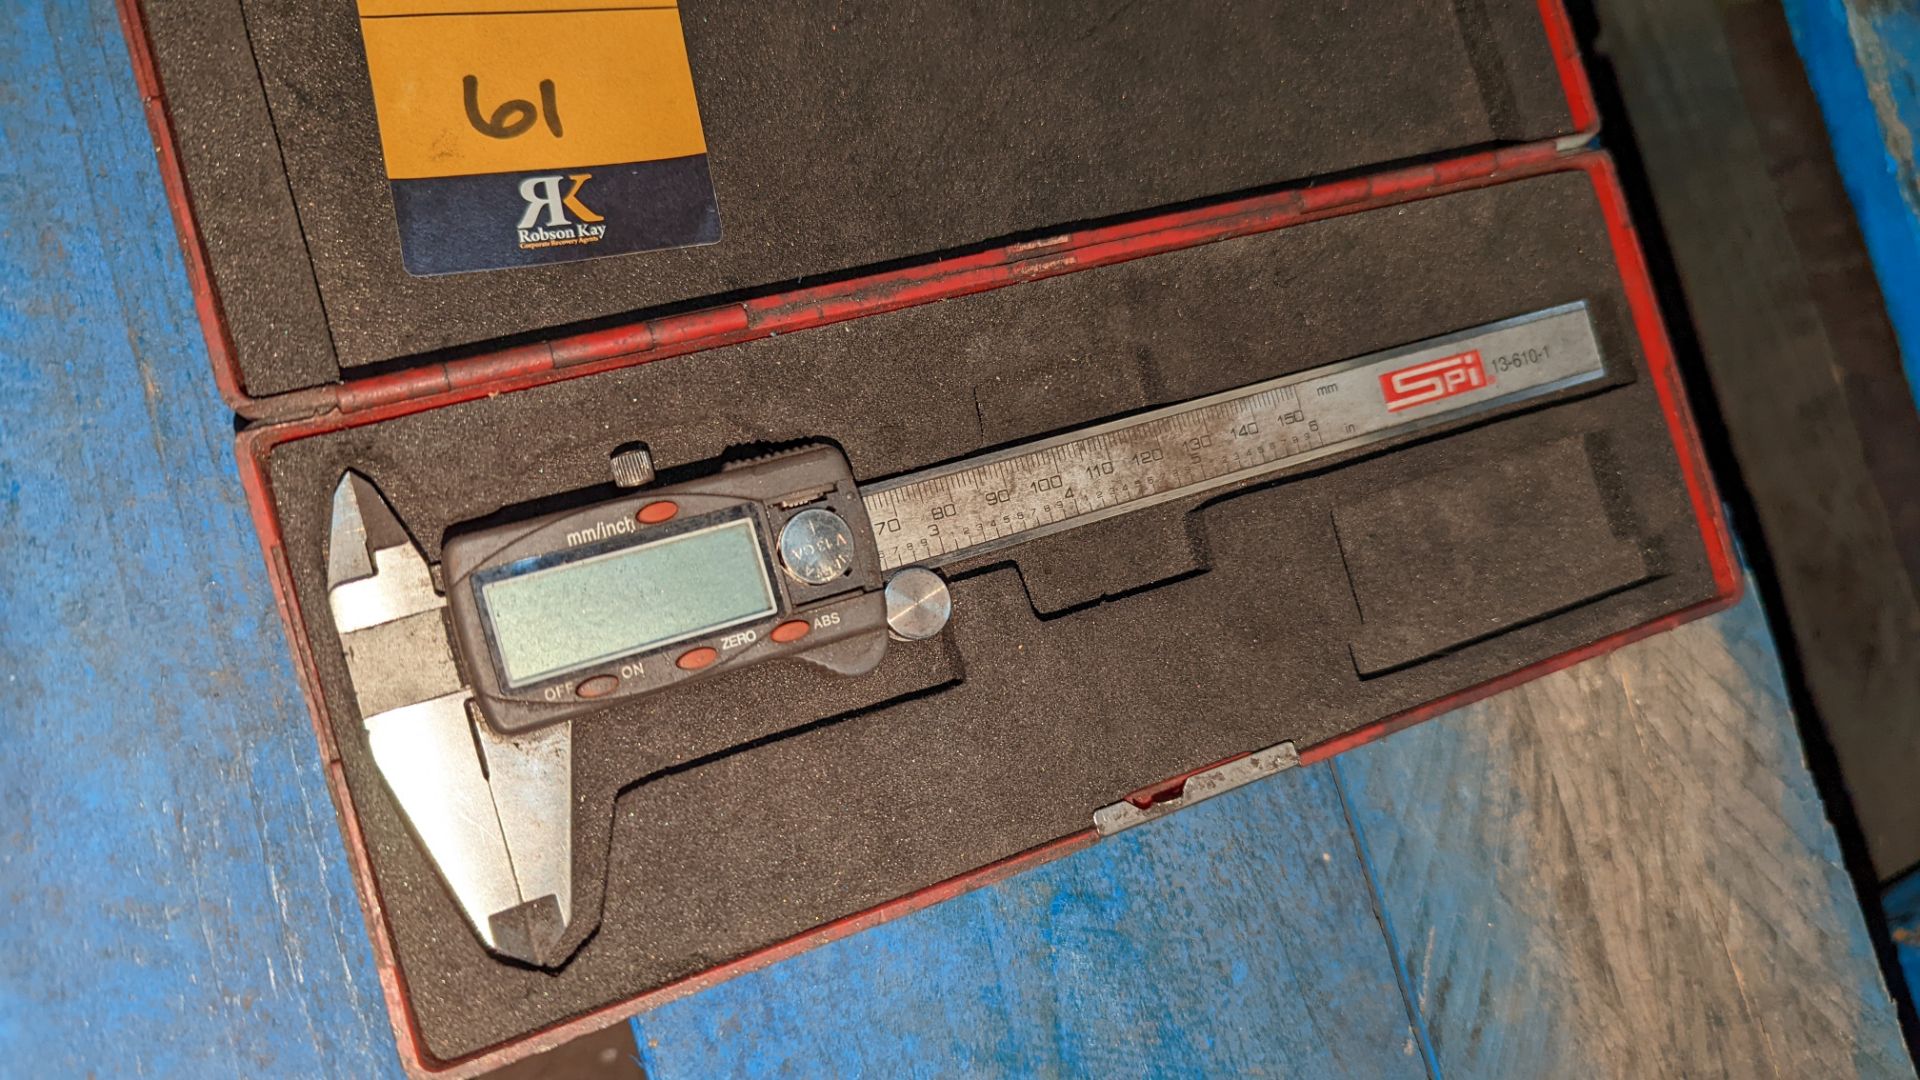 SPI digital measuring calliper - Image 5 of 5